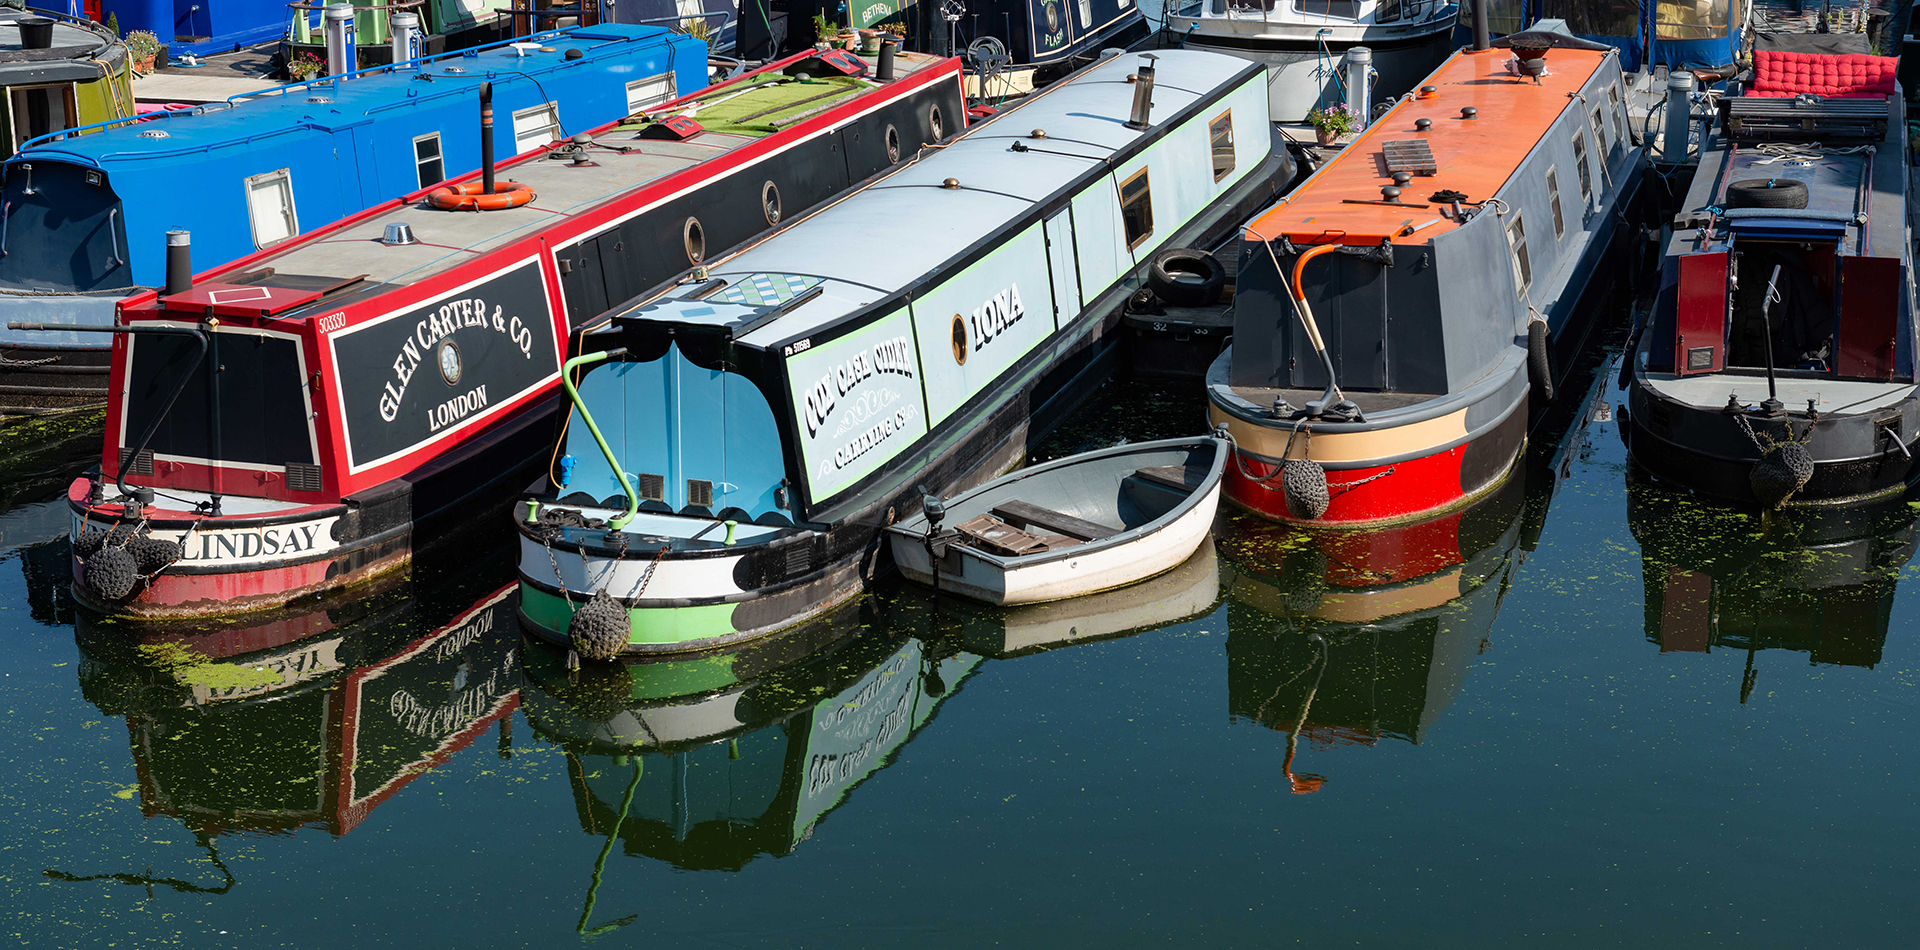 Narrow boats in a marina on the tidal Thames